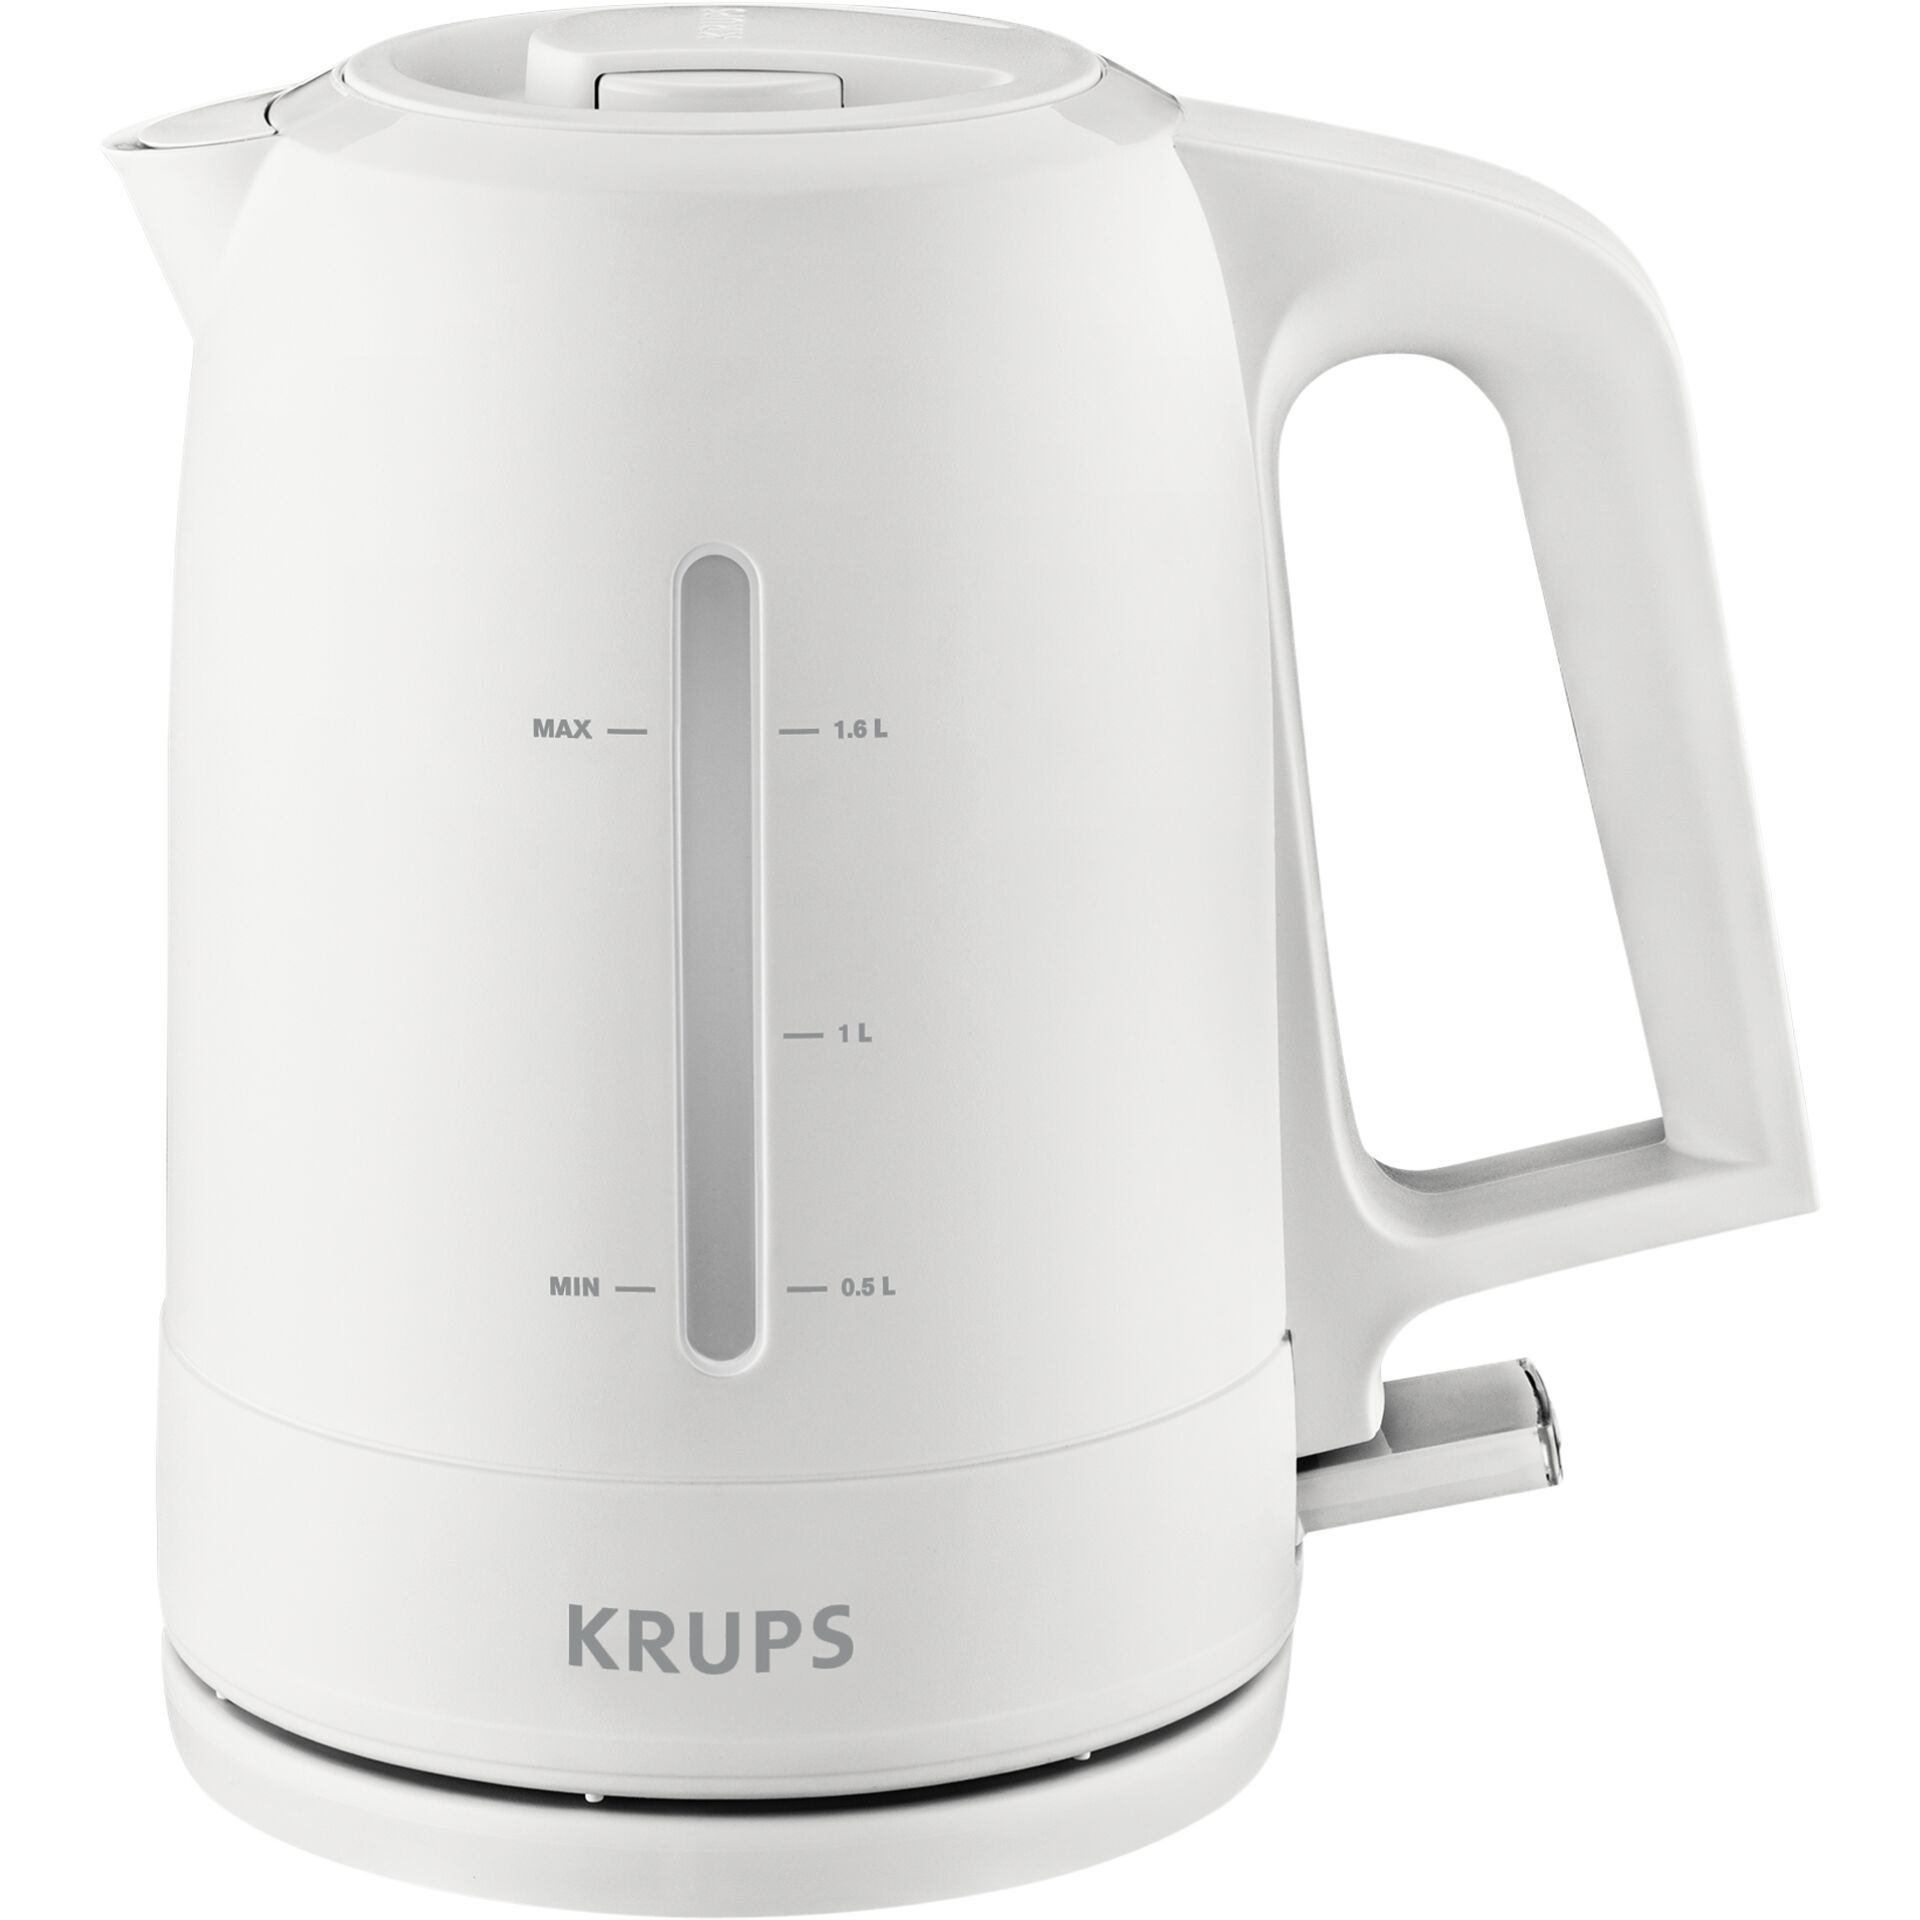 Krups -6 Liter Weiß BW2441 Pro Aroma Wasserkocher 1 (BW2441) -Krups  Hardware/Electronic Grooves.land/Playthek